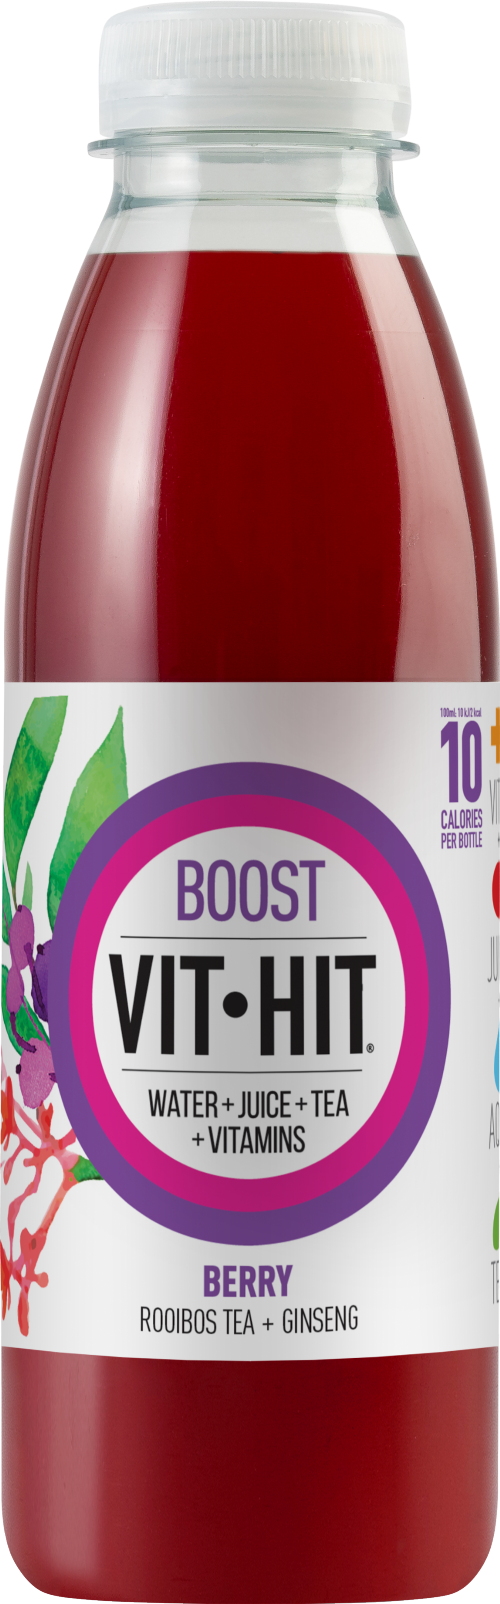 VITHIT Boost - Berry 500ml